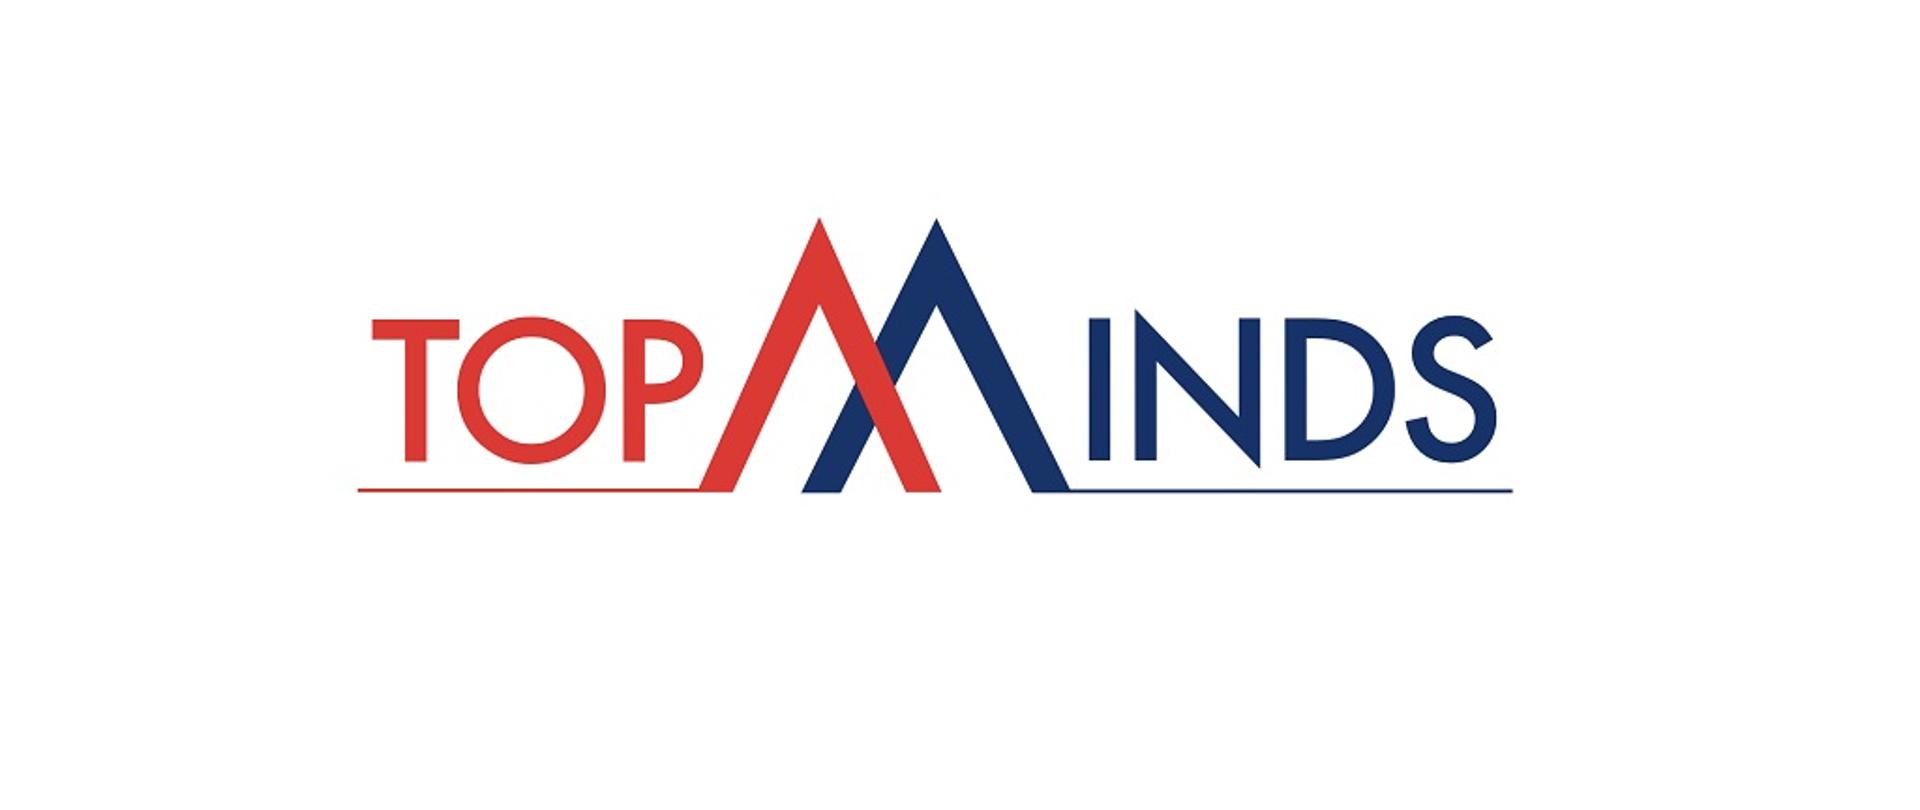 Logo TopMinds - napis TOPMINDS, litera M spleciona z dwóch trójkątów